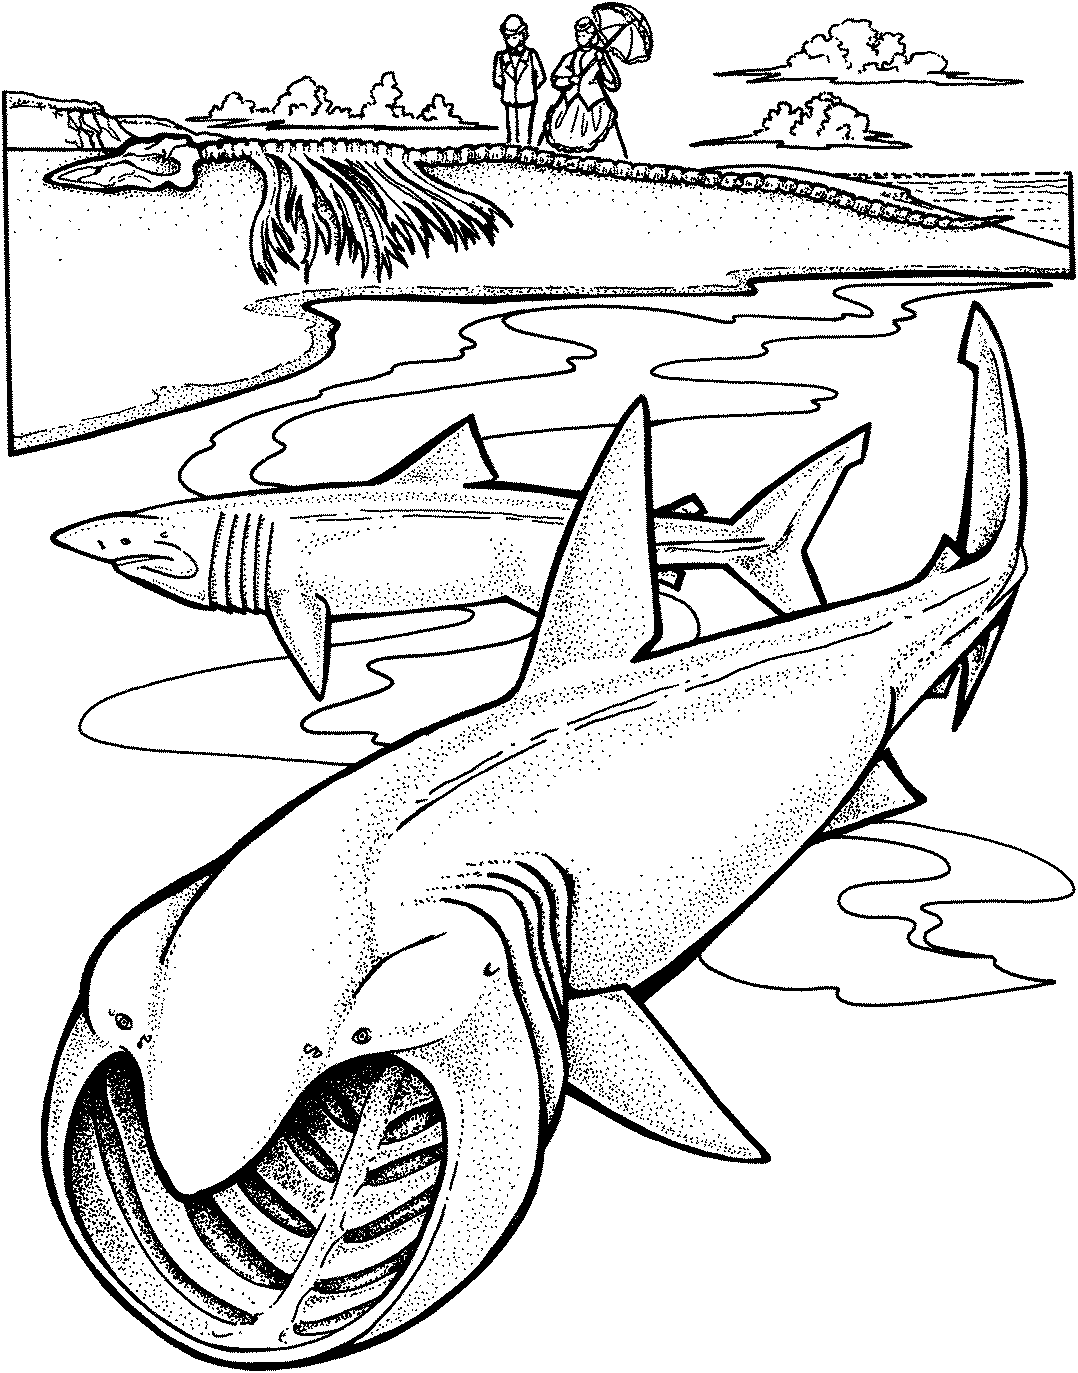 Big Mouth Shark Coloring Page - Free Printable Coloring ...